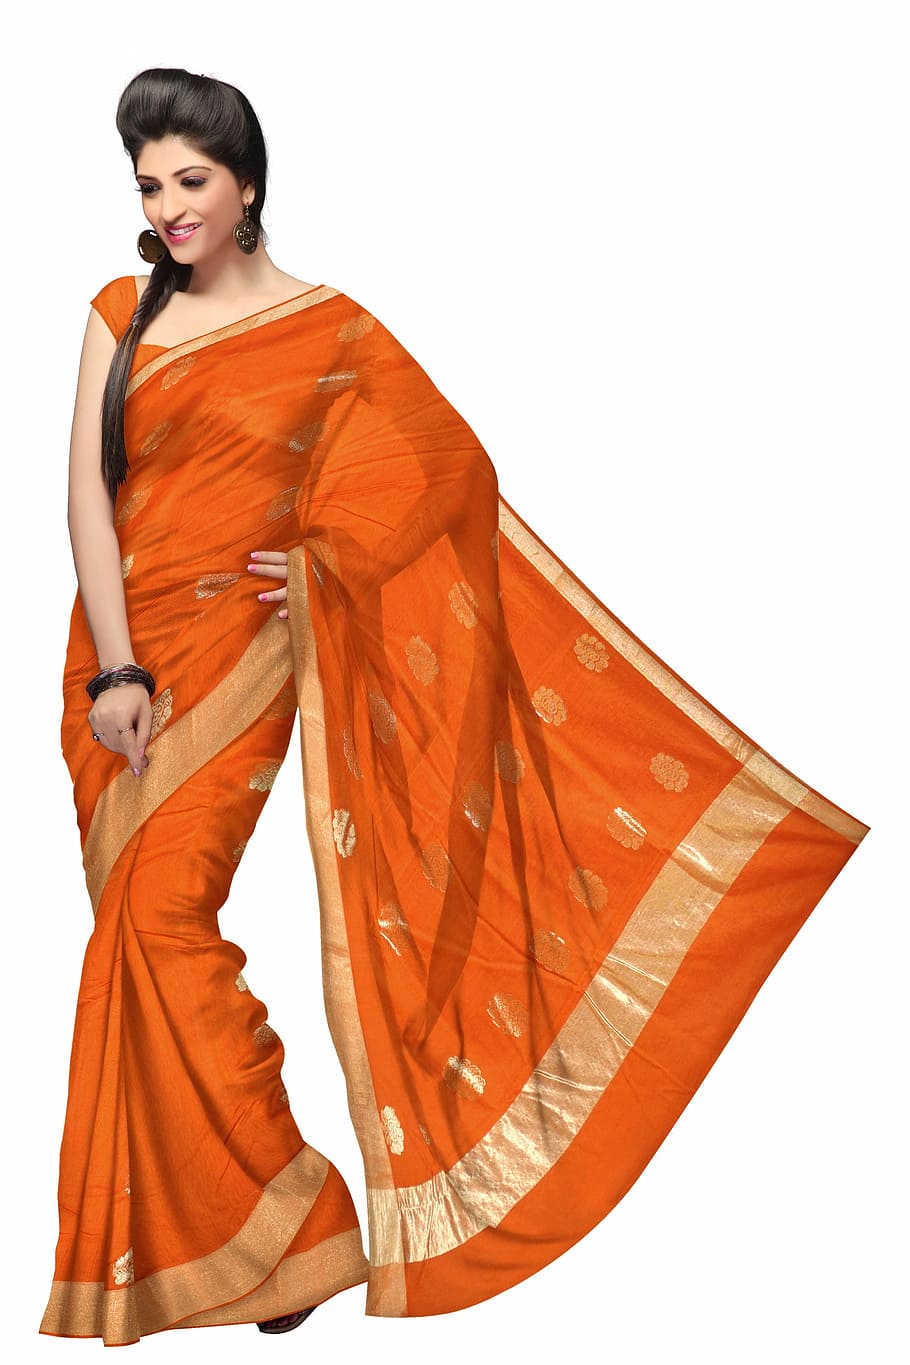 Women S Orange Kameez Dress, Saree, Fashion, Silk, - Fashion Hd Saree Model , HD Wallpaper & Backgrounds